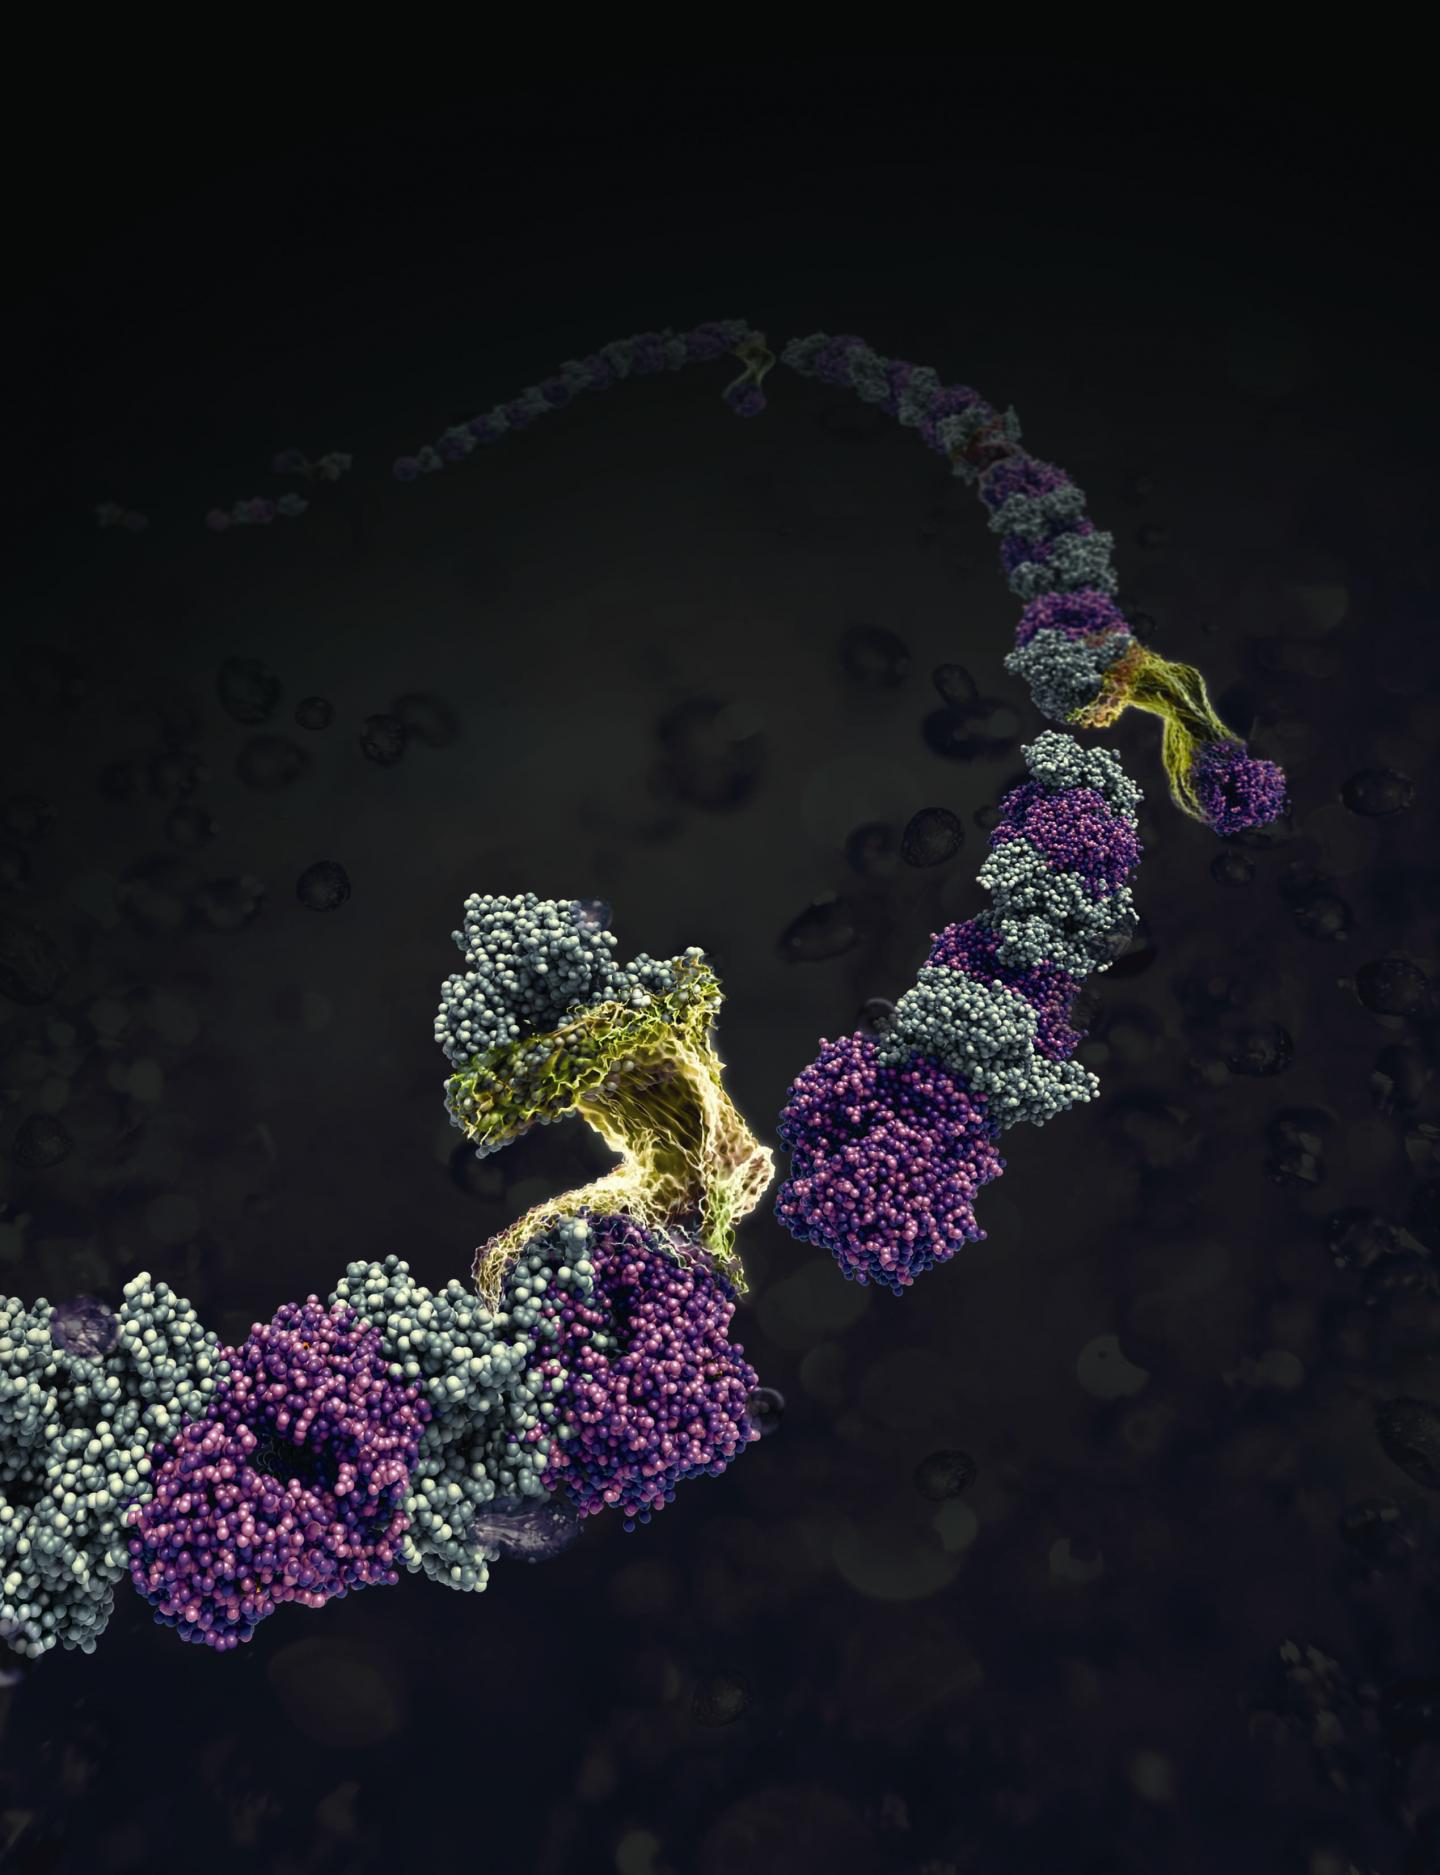 Jenas Hybrid Protein Nanofibers